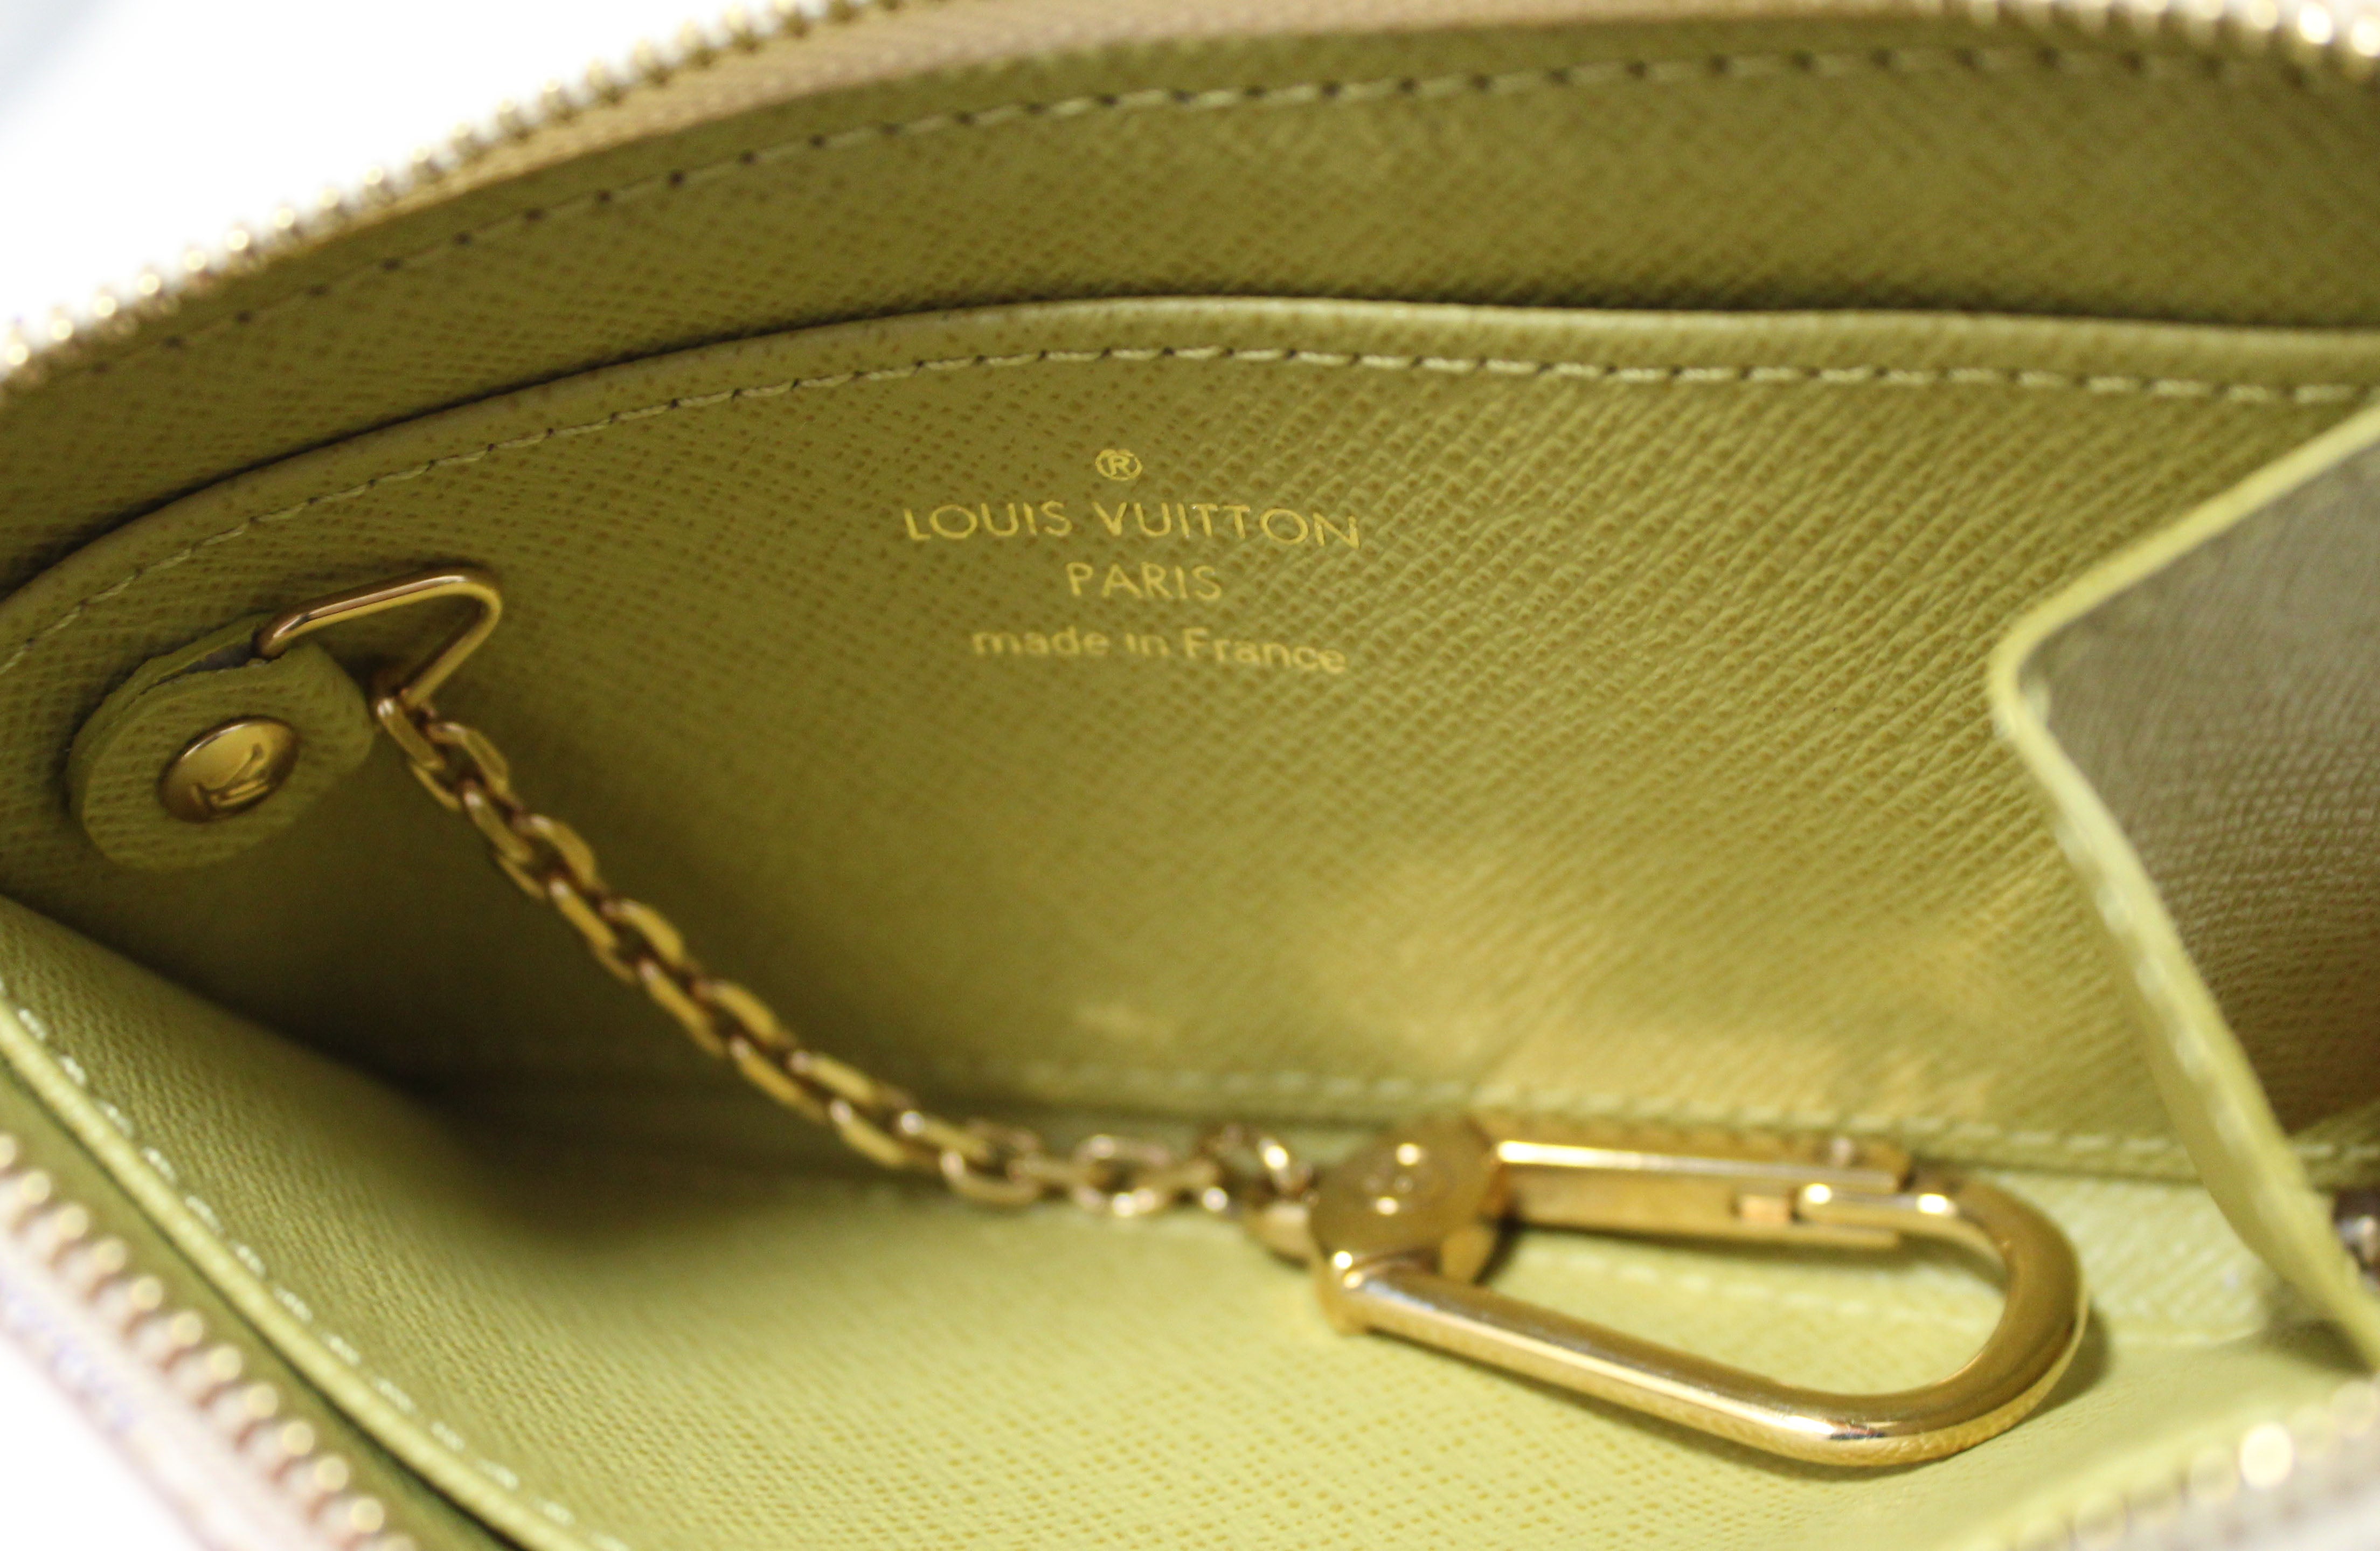 Louis Vuitton Coin case Mini Purse Damier Azur White Key Chain Leather  #462D